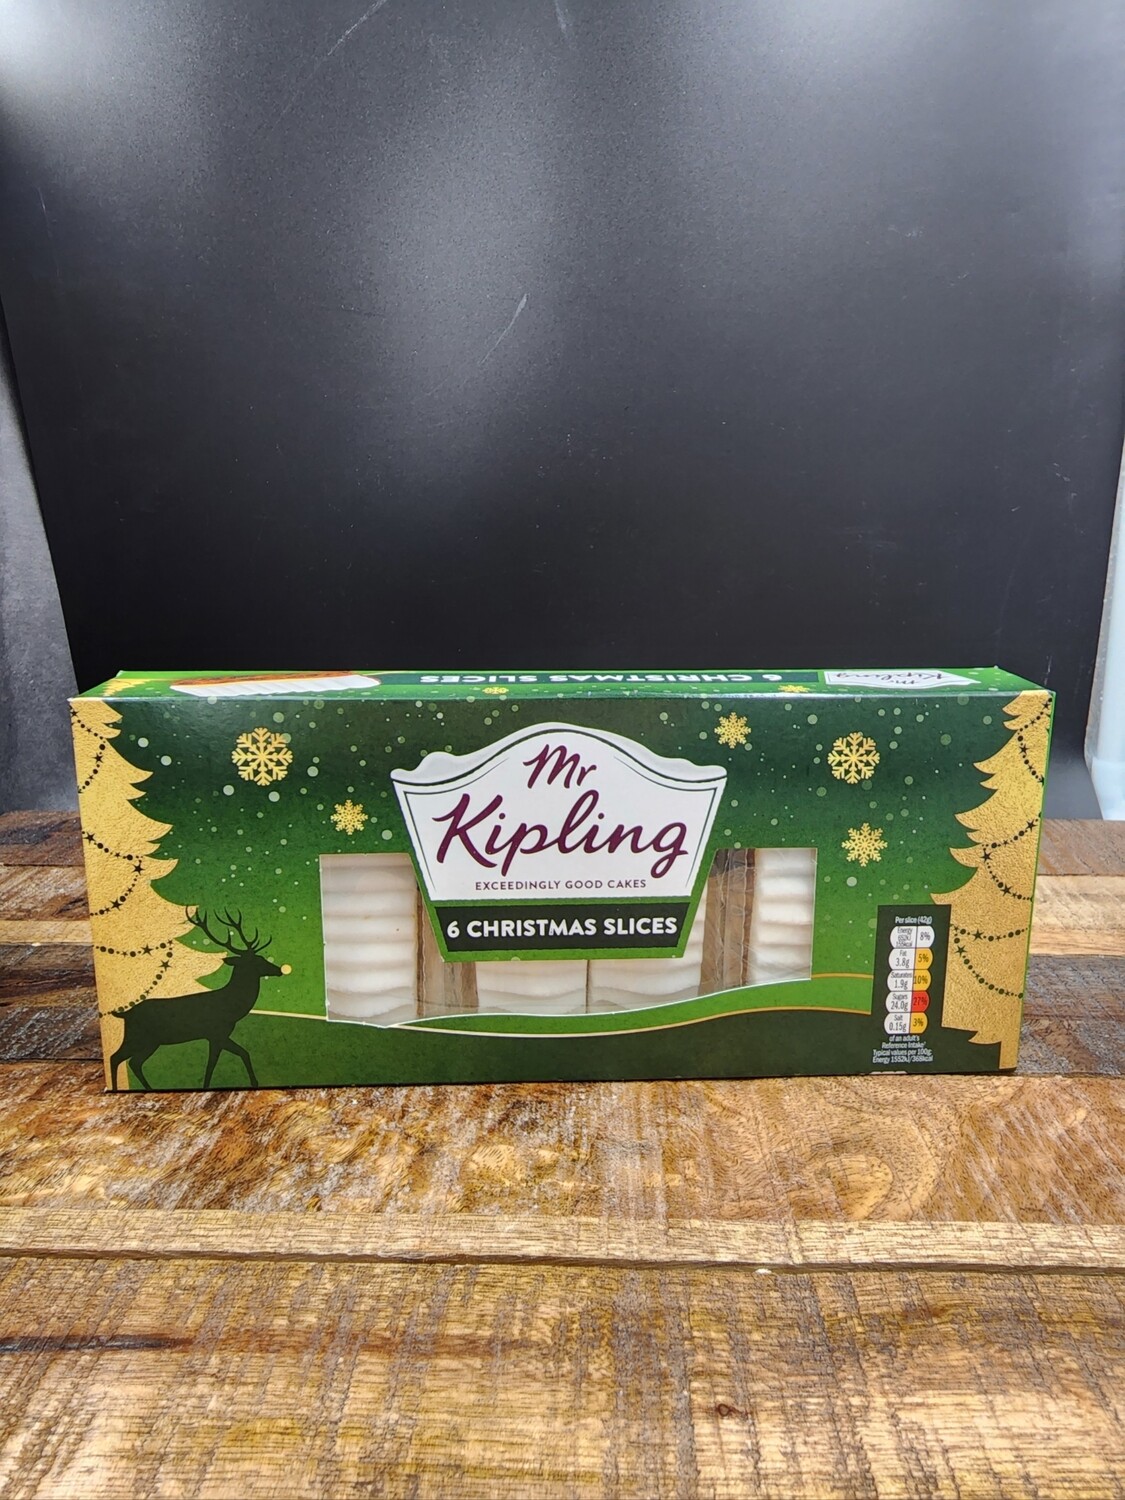 Mr Kipling Christmas Slices